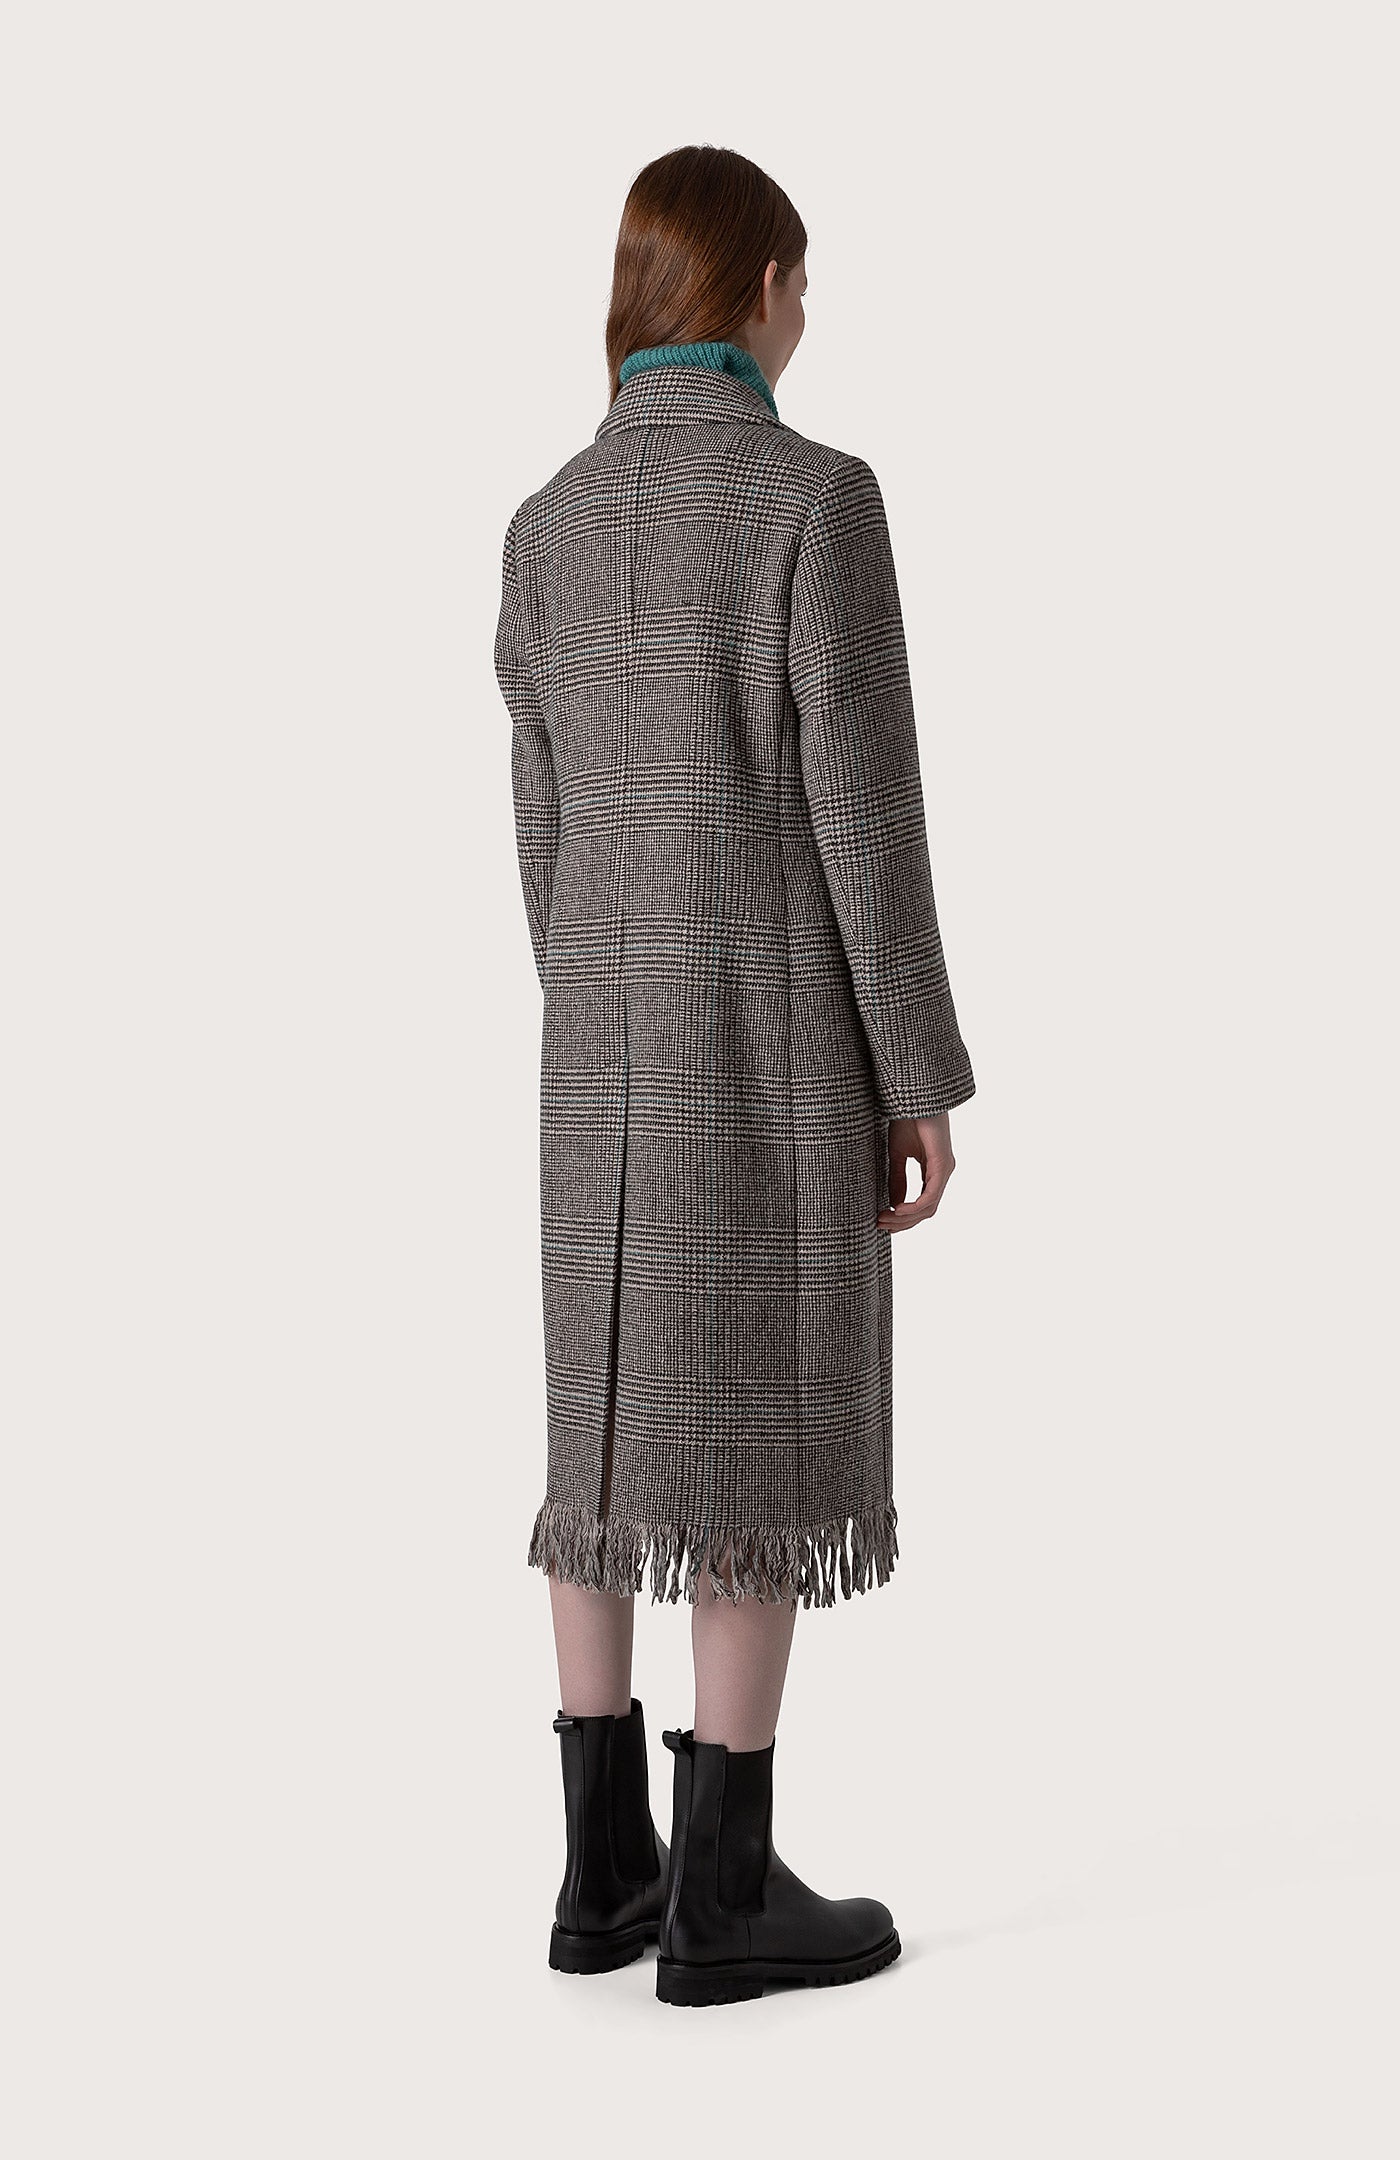 Women's coat with fringes